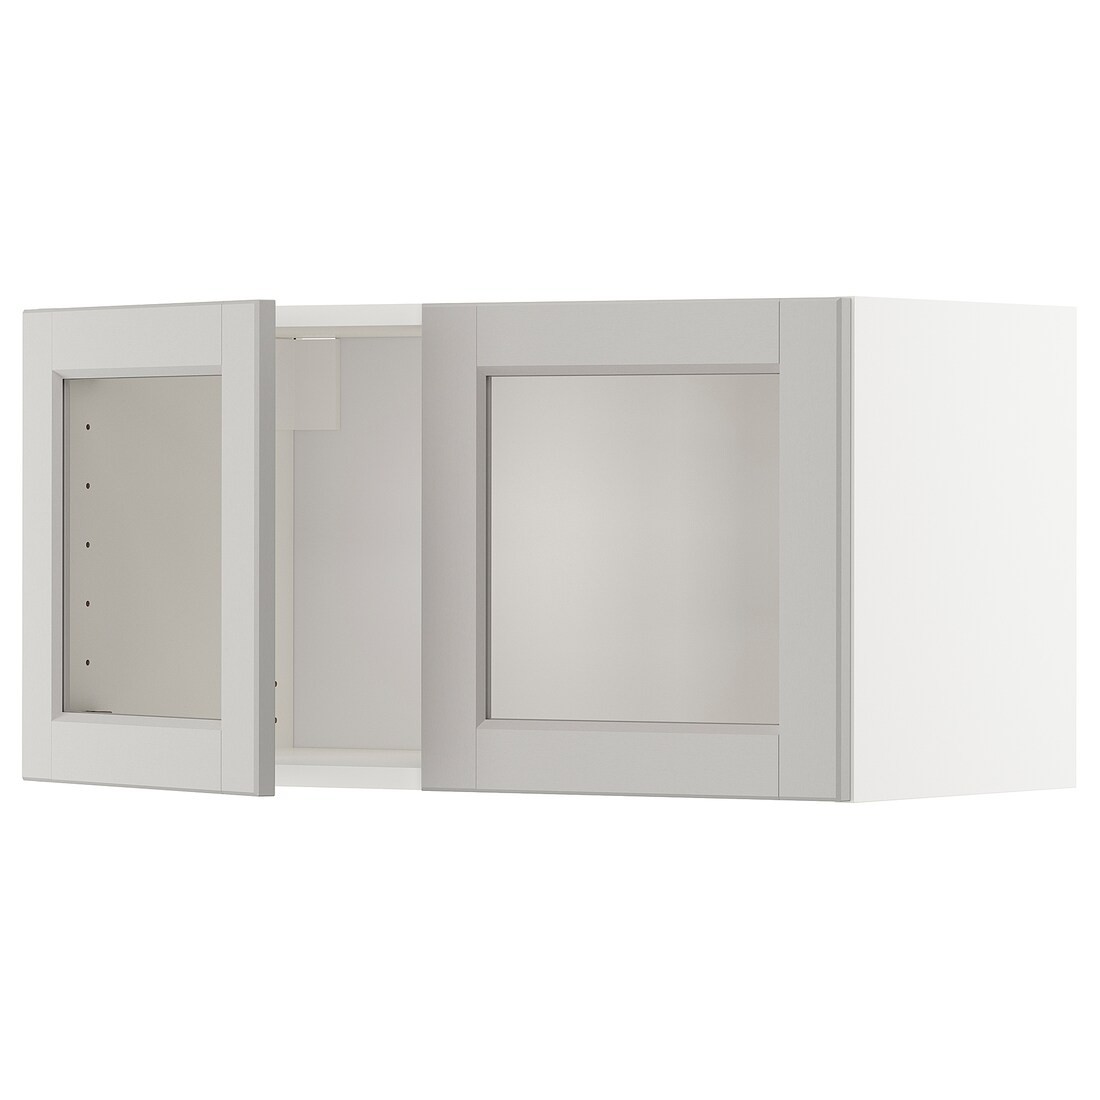 METOD МЕТОД Навесной шкаф / 2 стеклянные дверцы, белый / Lerhyttan светло-серый, 80x40 см